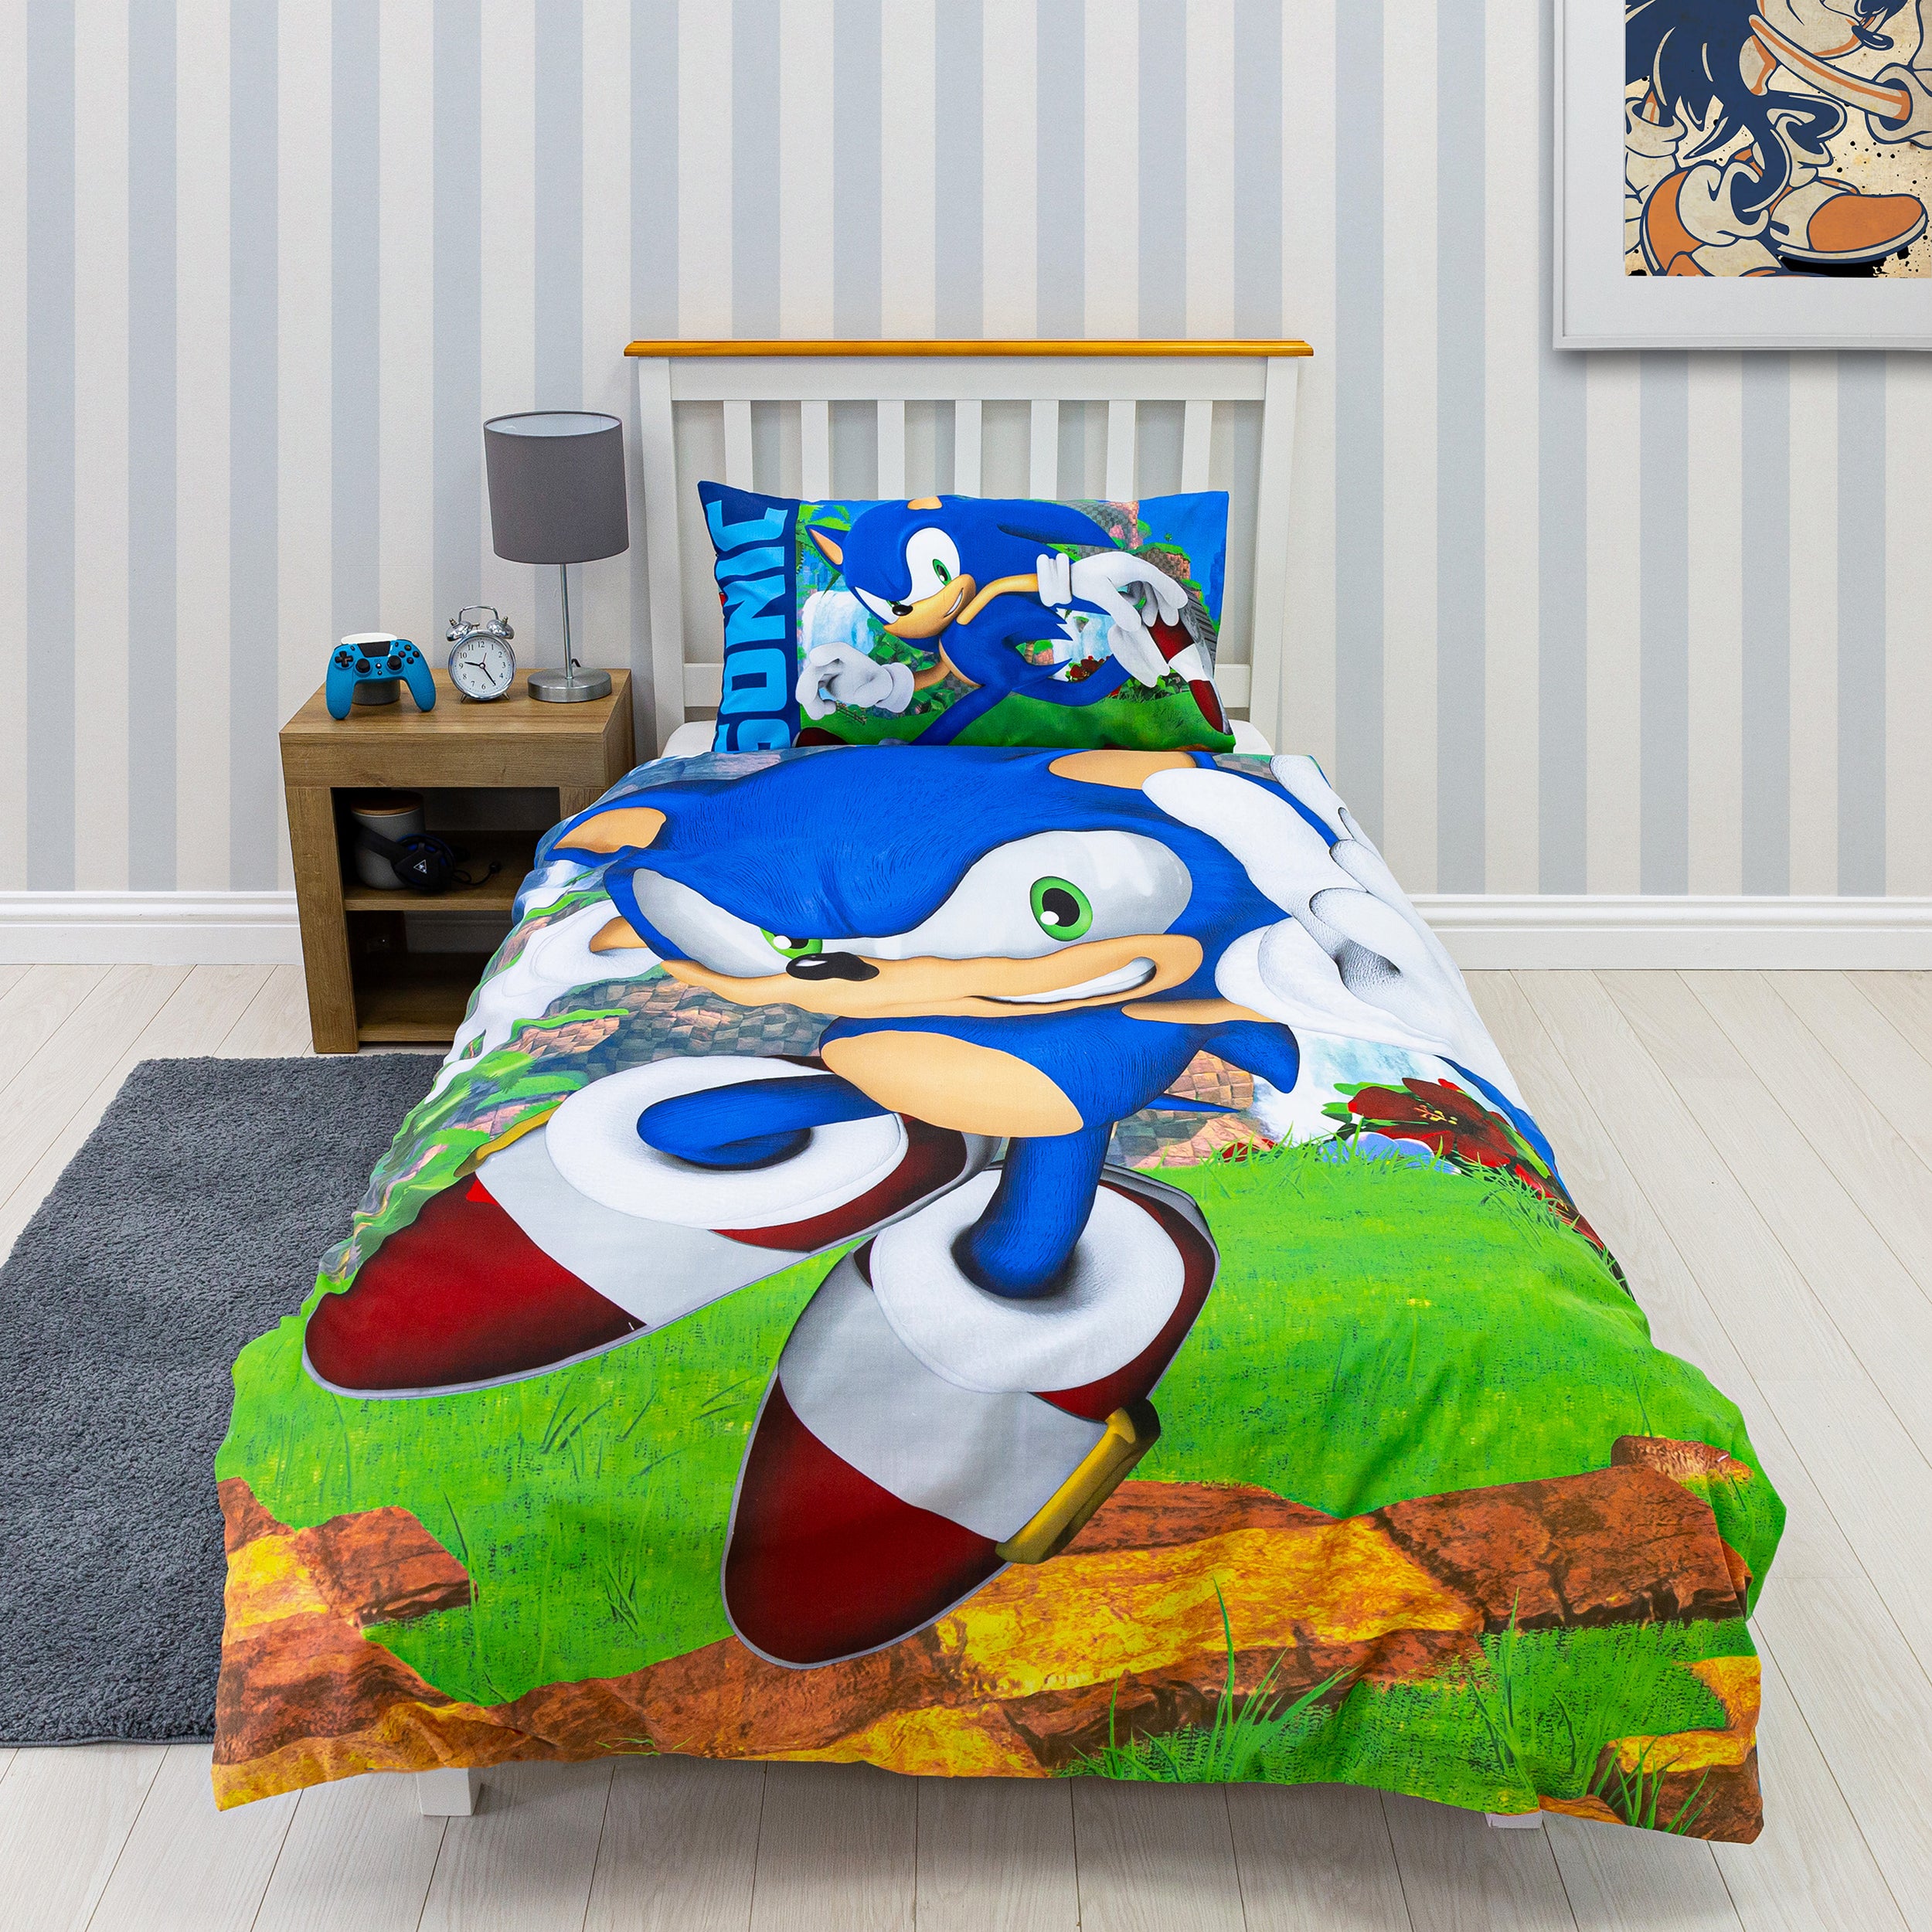 Sonic the Hedgehog Duvet Cover & Pillowcase Set, Single